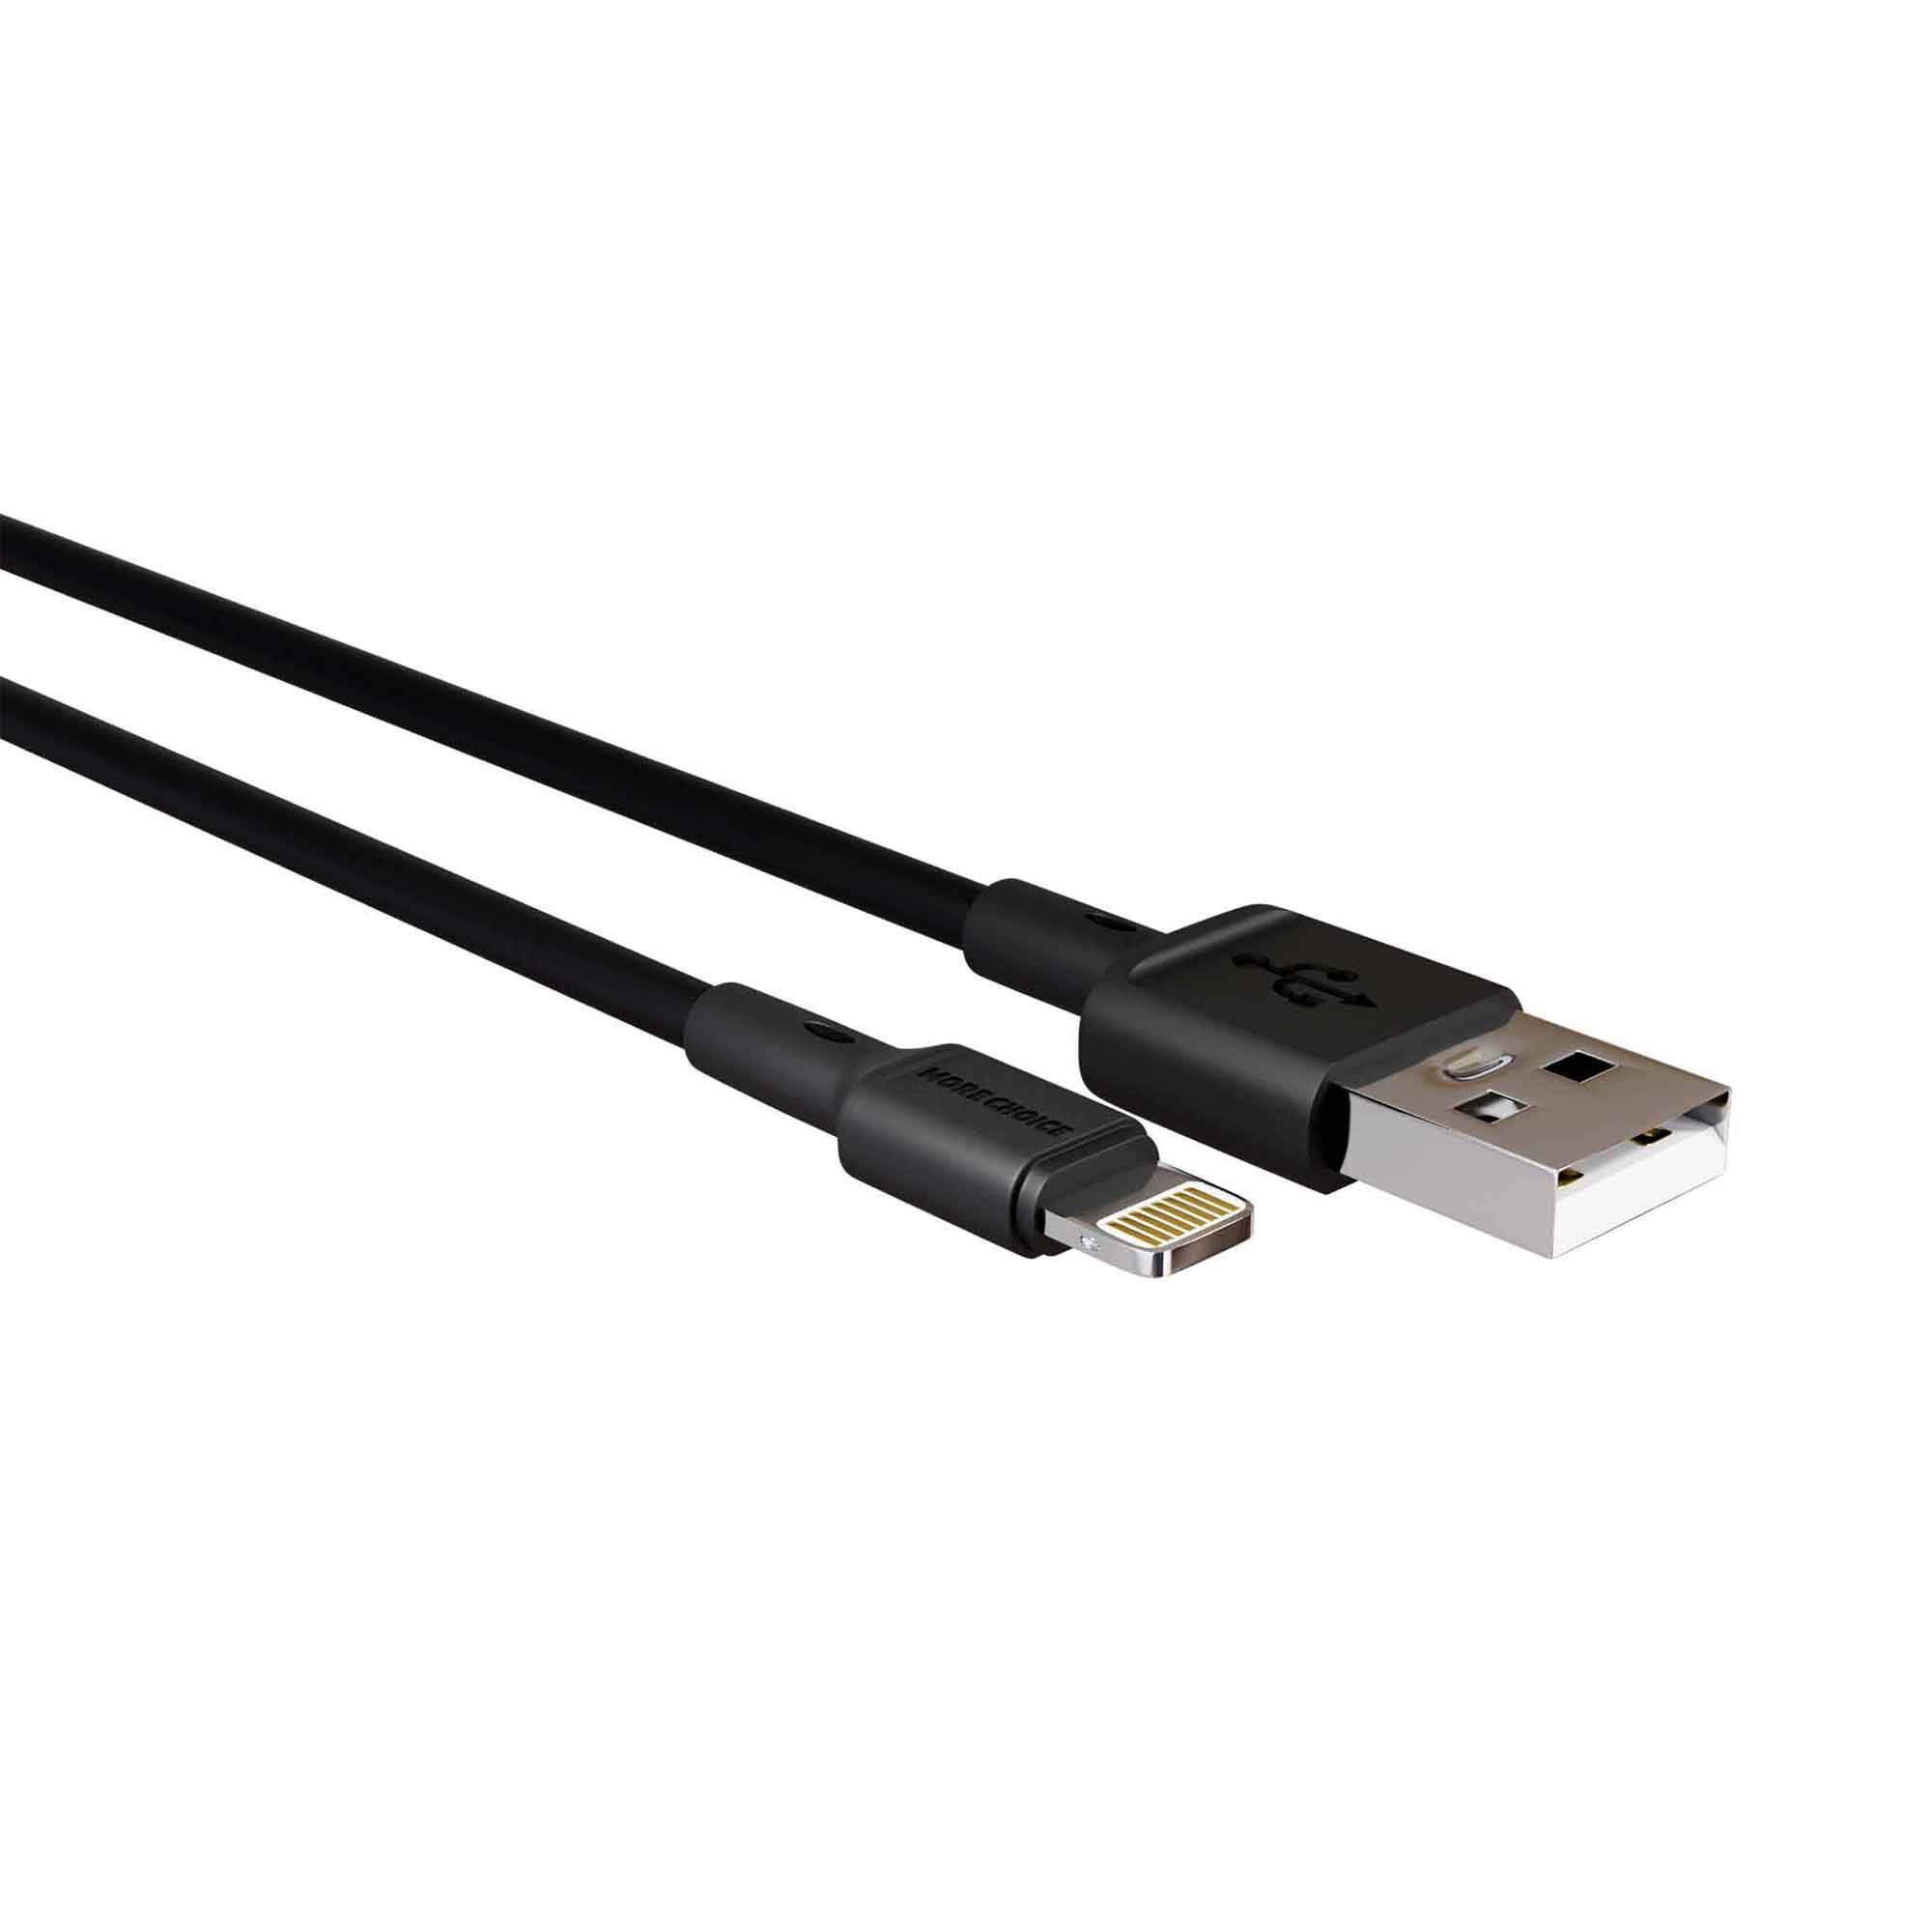 Дата-кабель More choice K14i TPE 2.0A Lightning 8-pin Black USB 0.25m дата кабель usb 2 0a для lightning 8 pin more choice k14i tpe 3м white